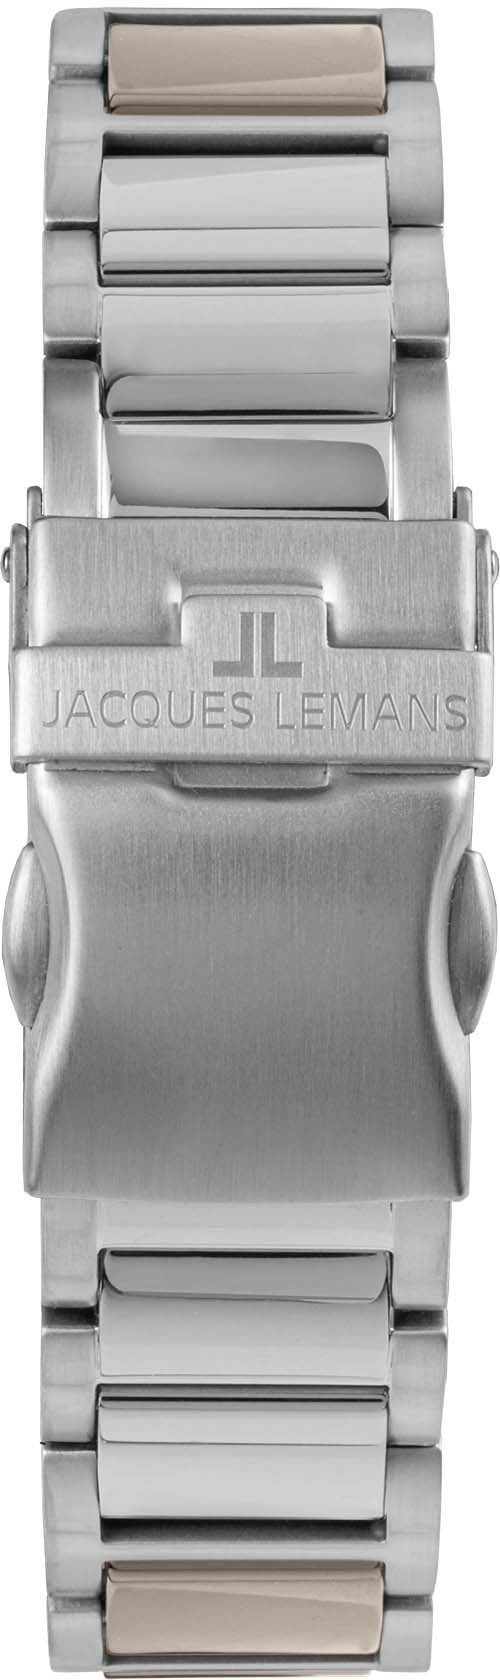 Keramikuhr taupe Lemans Jacques Liverpool, 42-12K